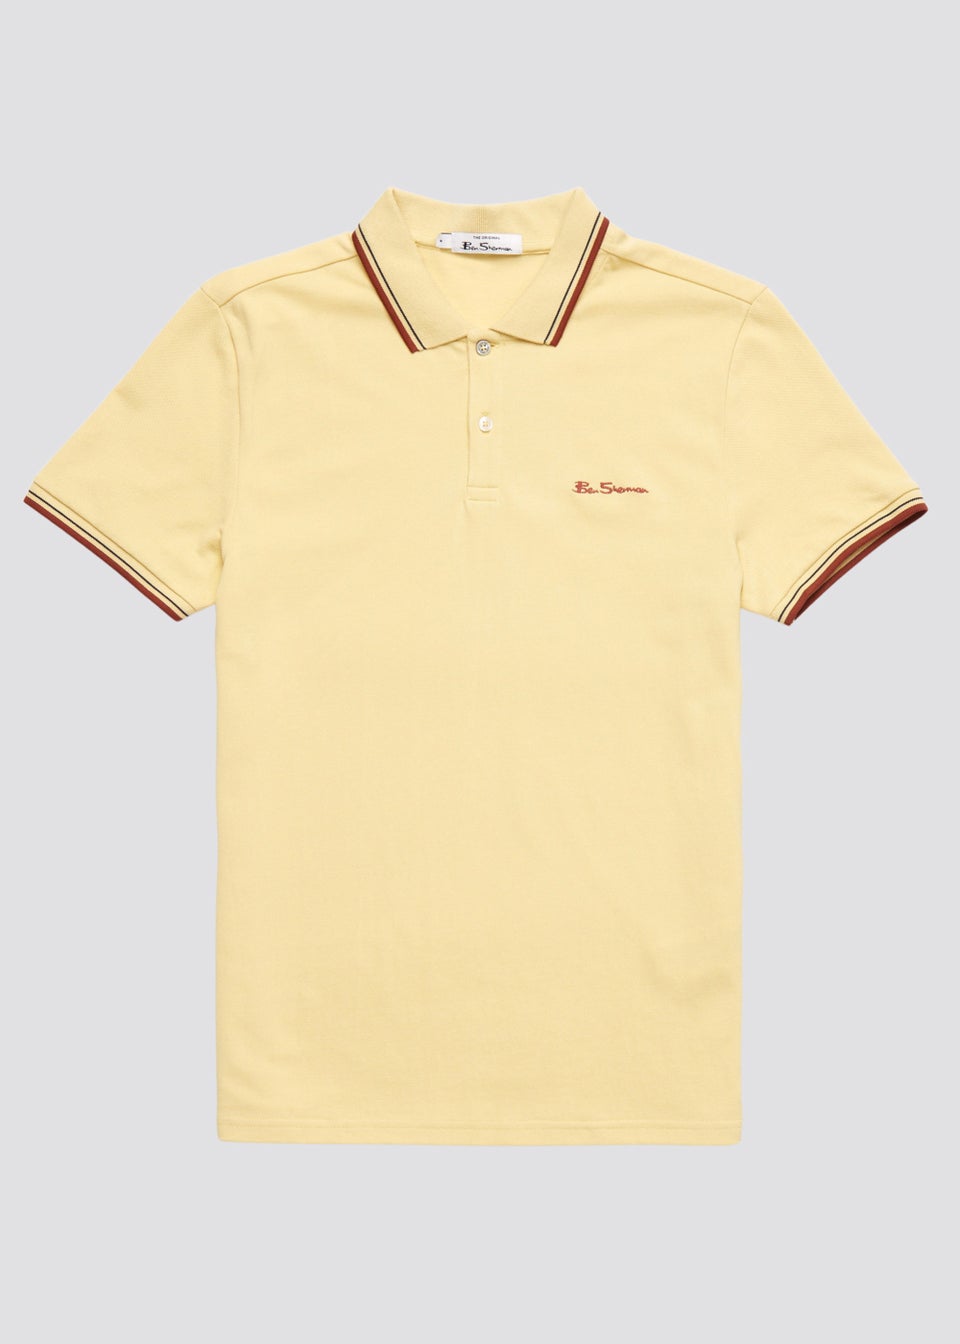 Ben Sherman Yellow Polo Shirt - Matalan